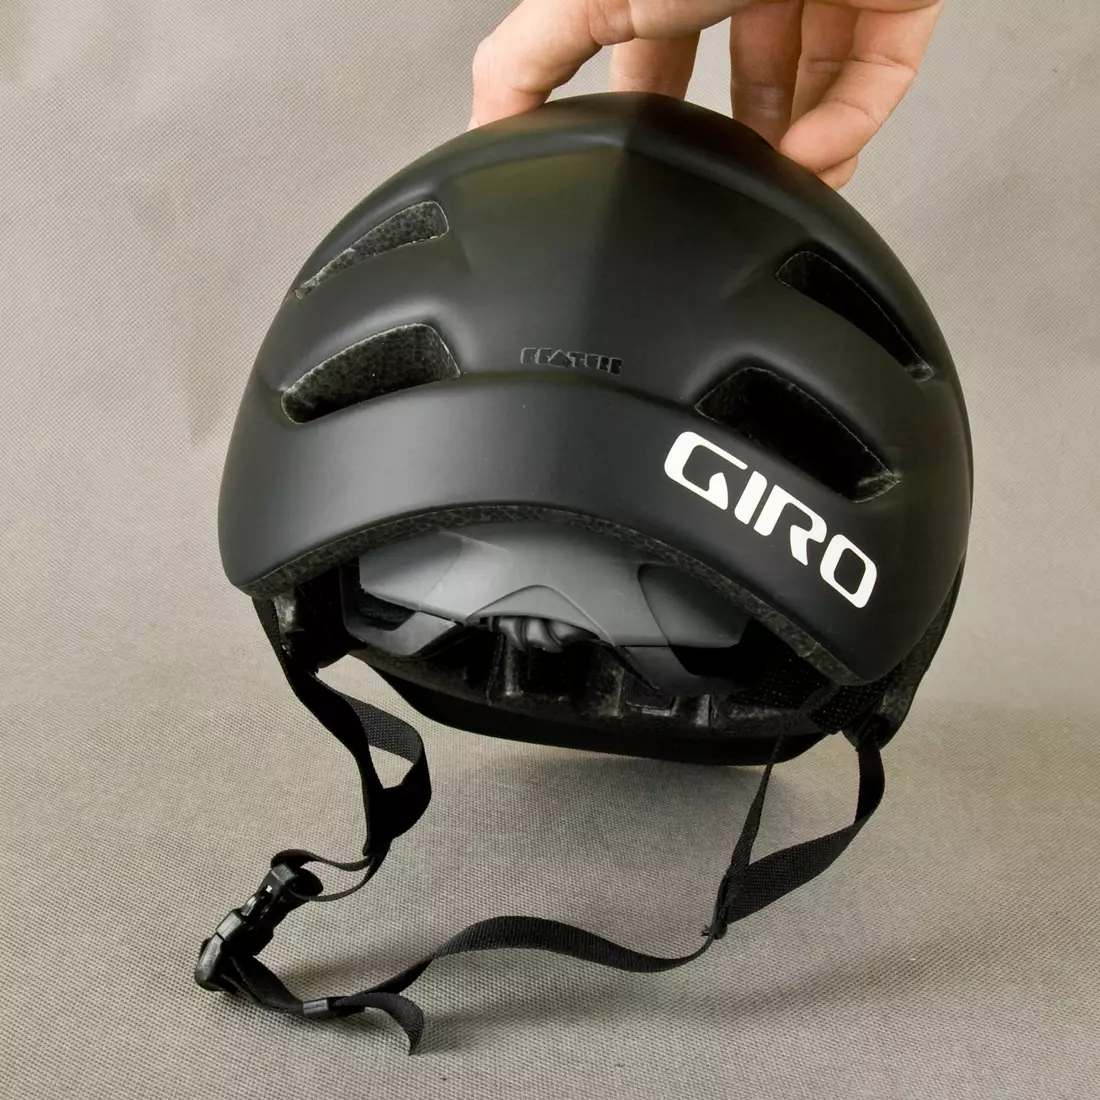 GIRO bicycle helmet FEATURE black mat